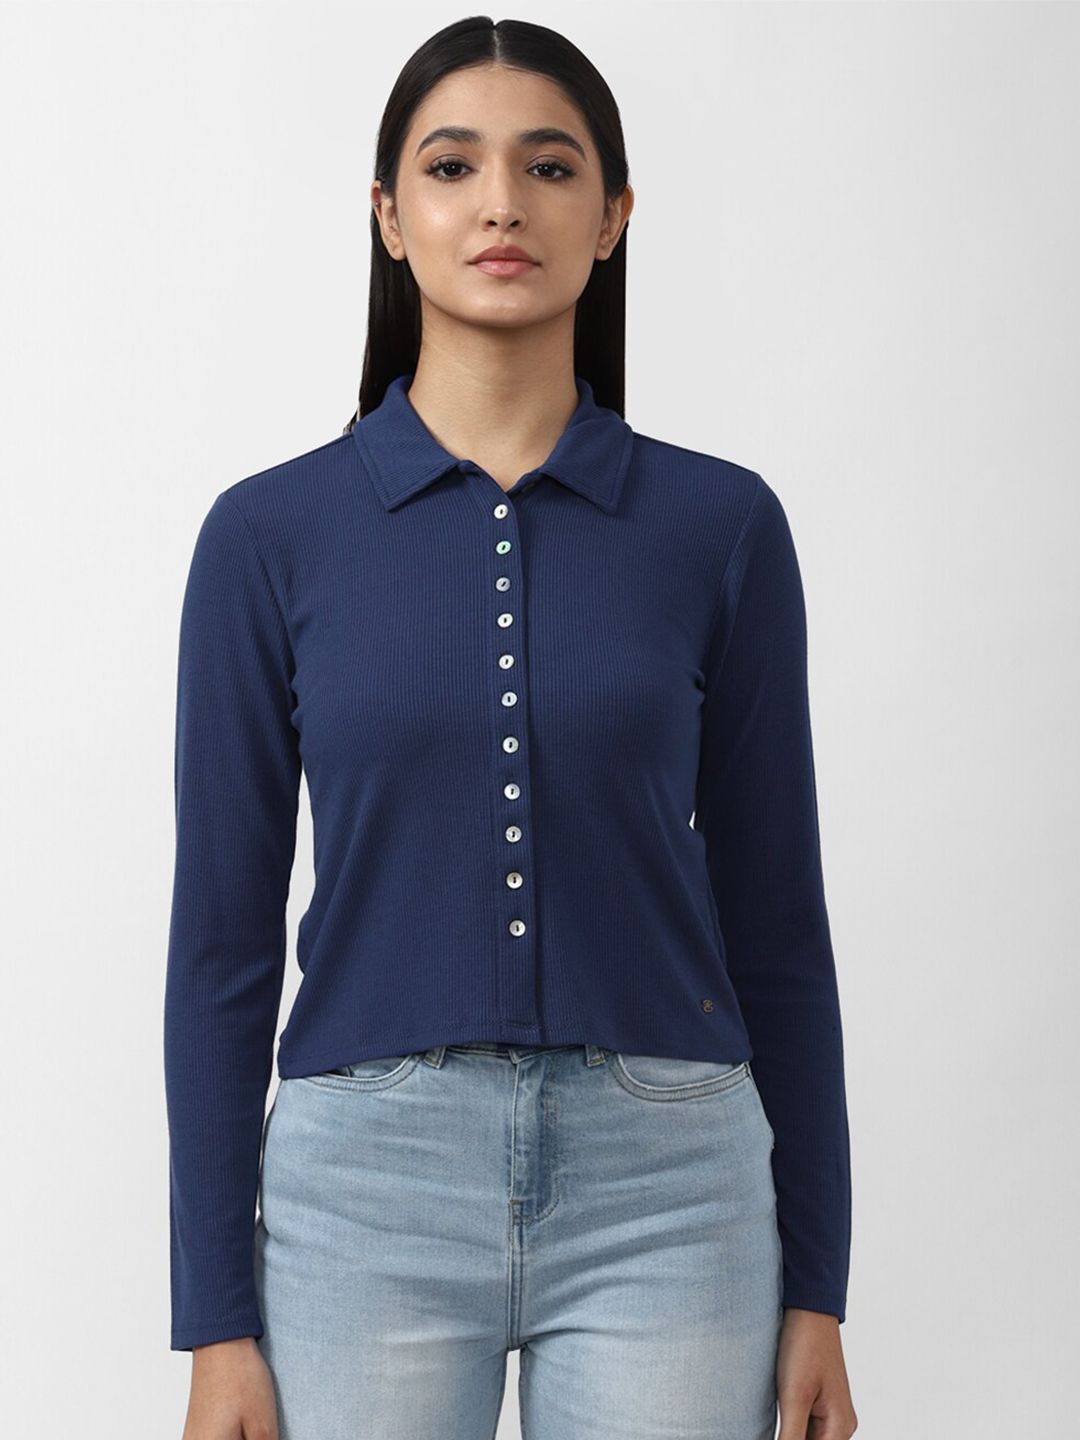 Van Heusen Woman Navy Blue Shirt Style Top Price in India